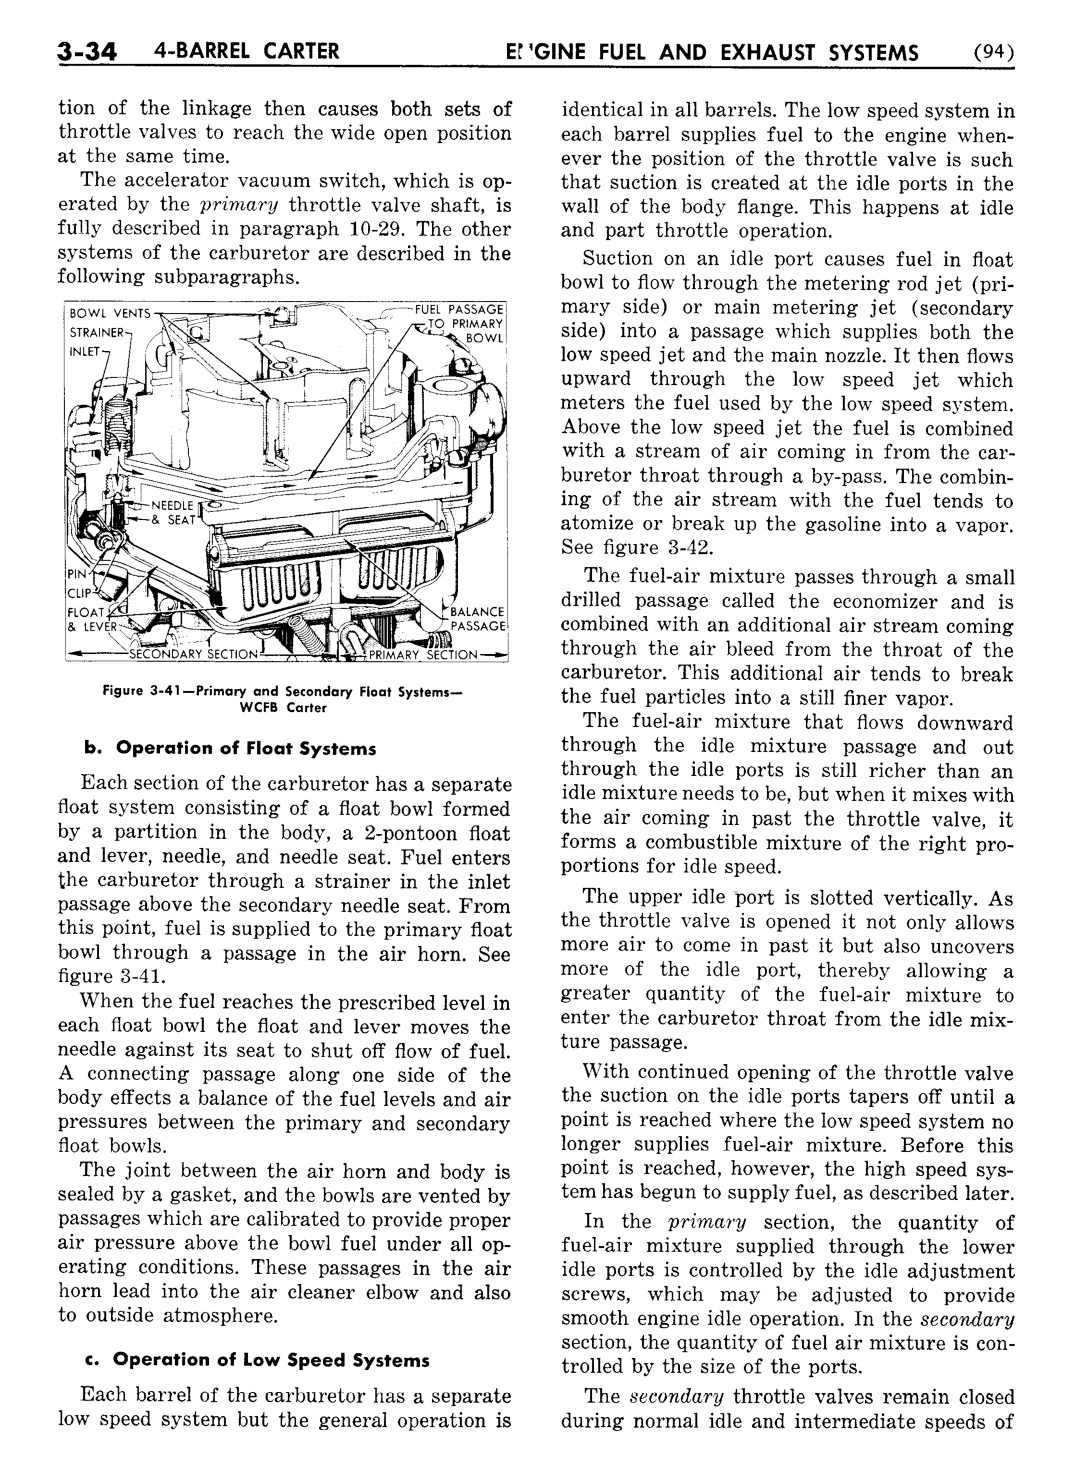 n_04 1954 Buick Shop Manual - Engine Fuel & Exhaust-034-034.jpg